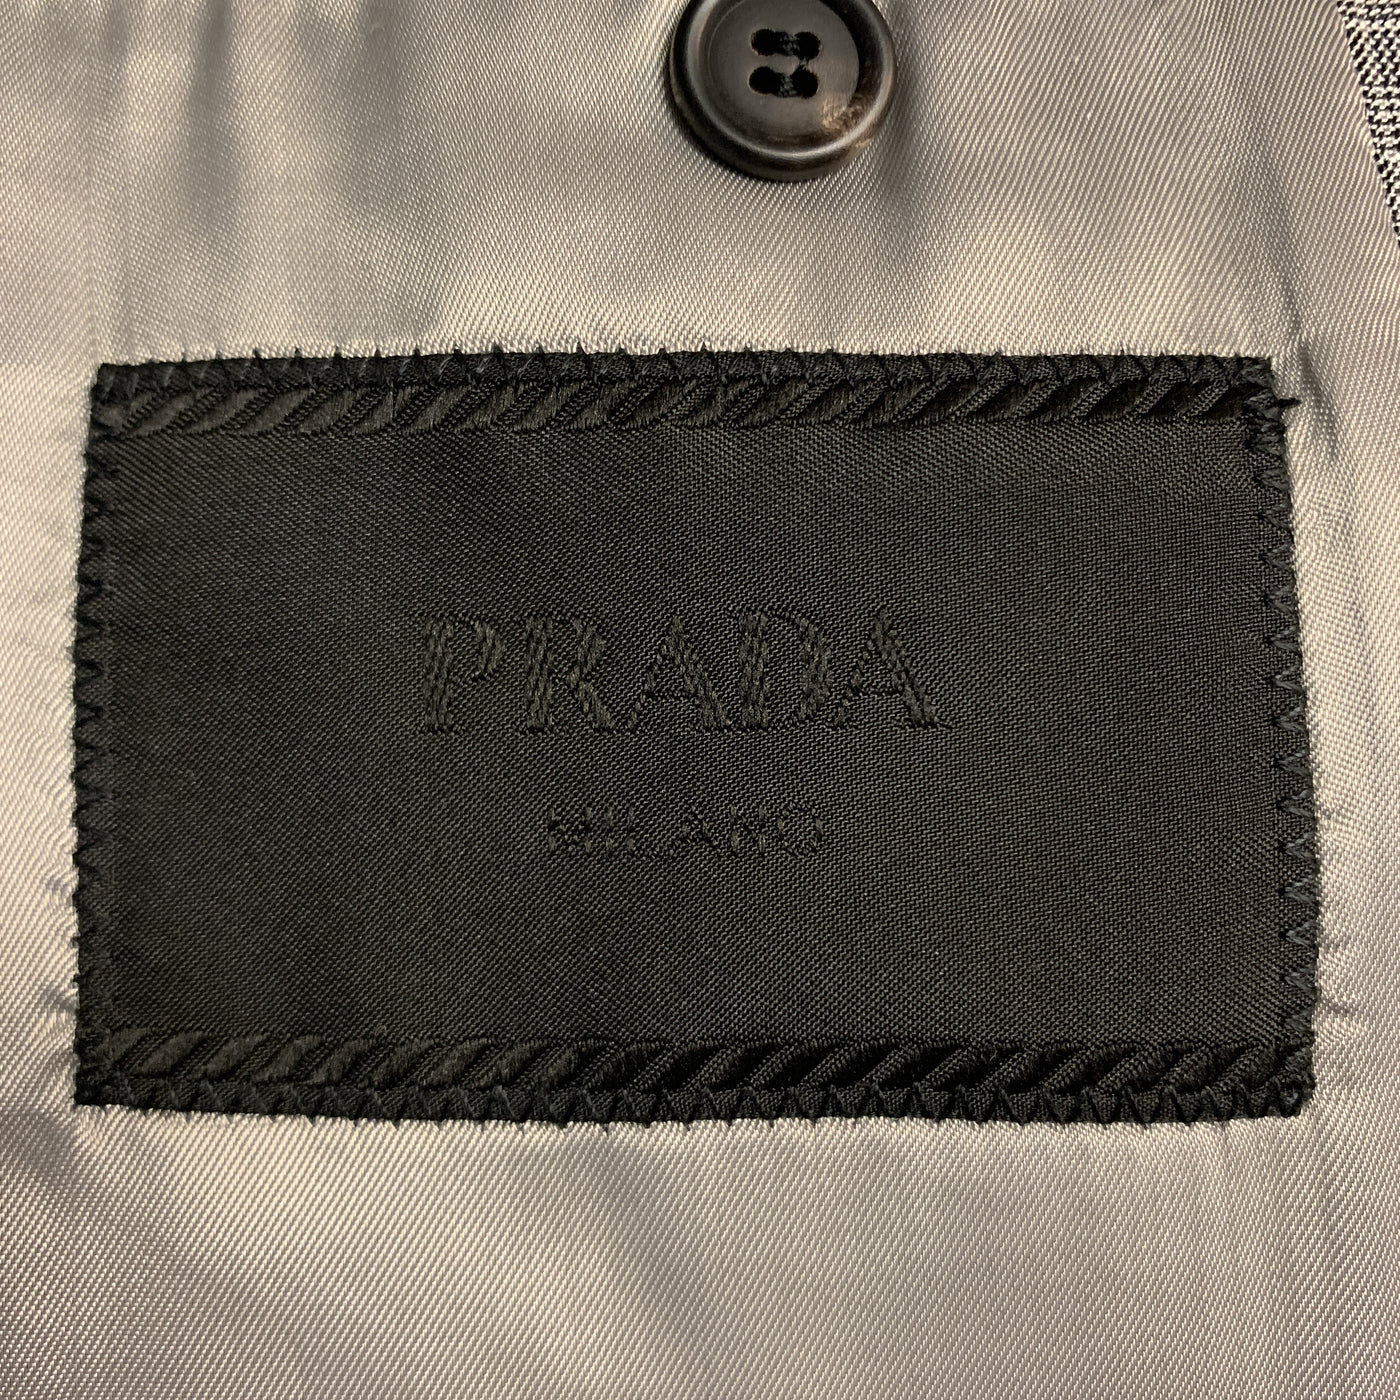 PRADA Size 38 Regular Plaid Grey Wool / Silk Notch Lapel Sport Coat